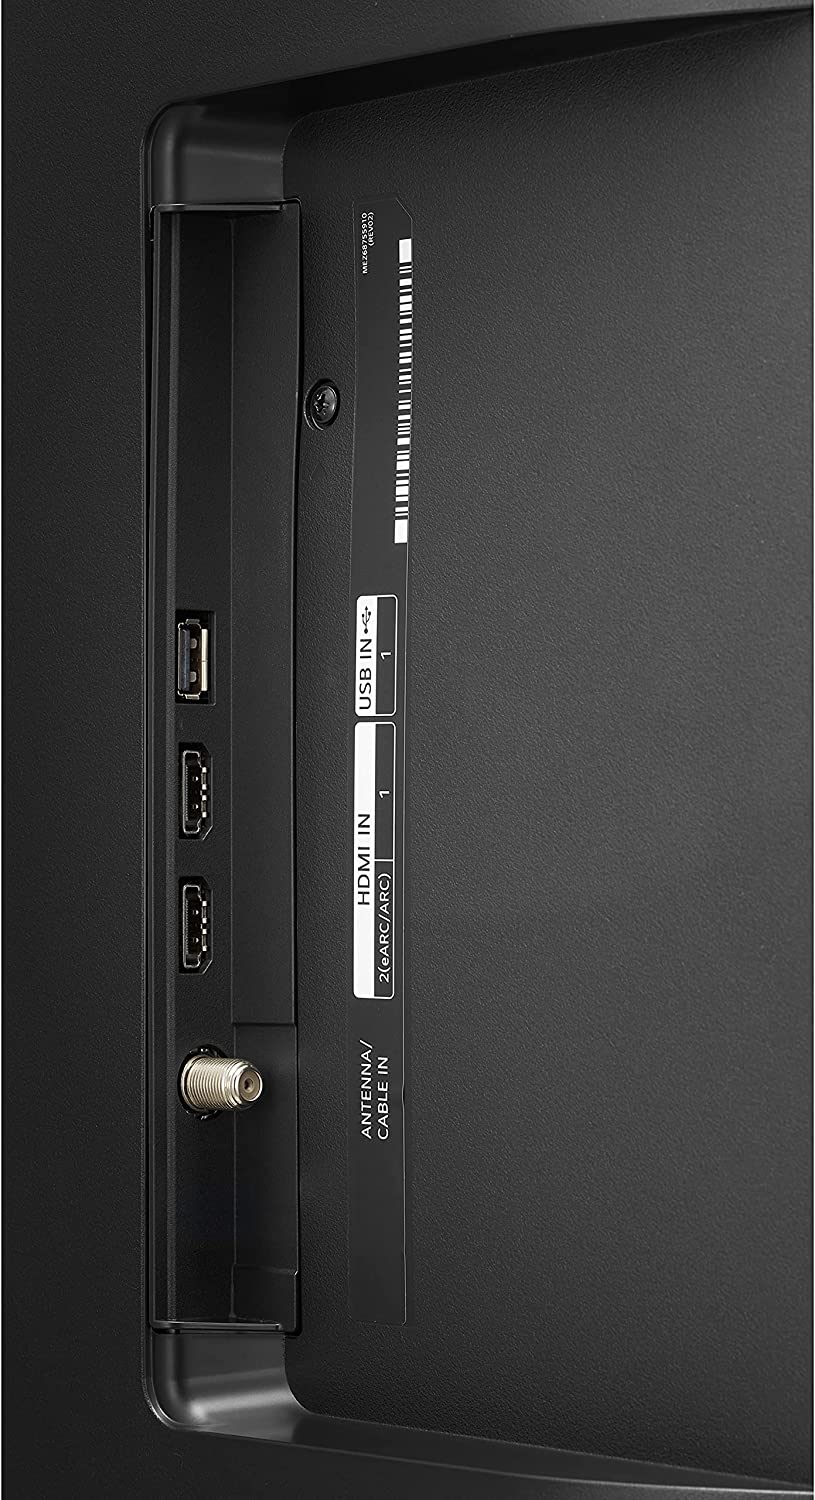 LG - 43” Class UP8000 Series LED 4K UHD Smart TV